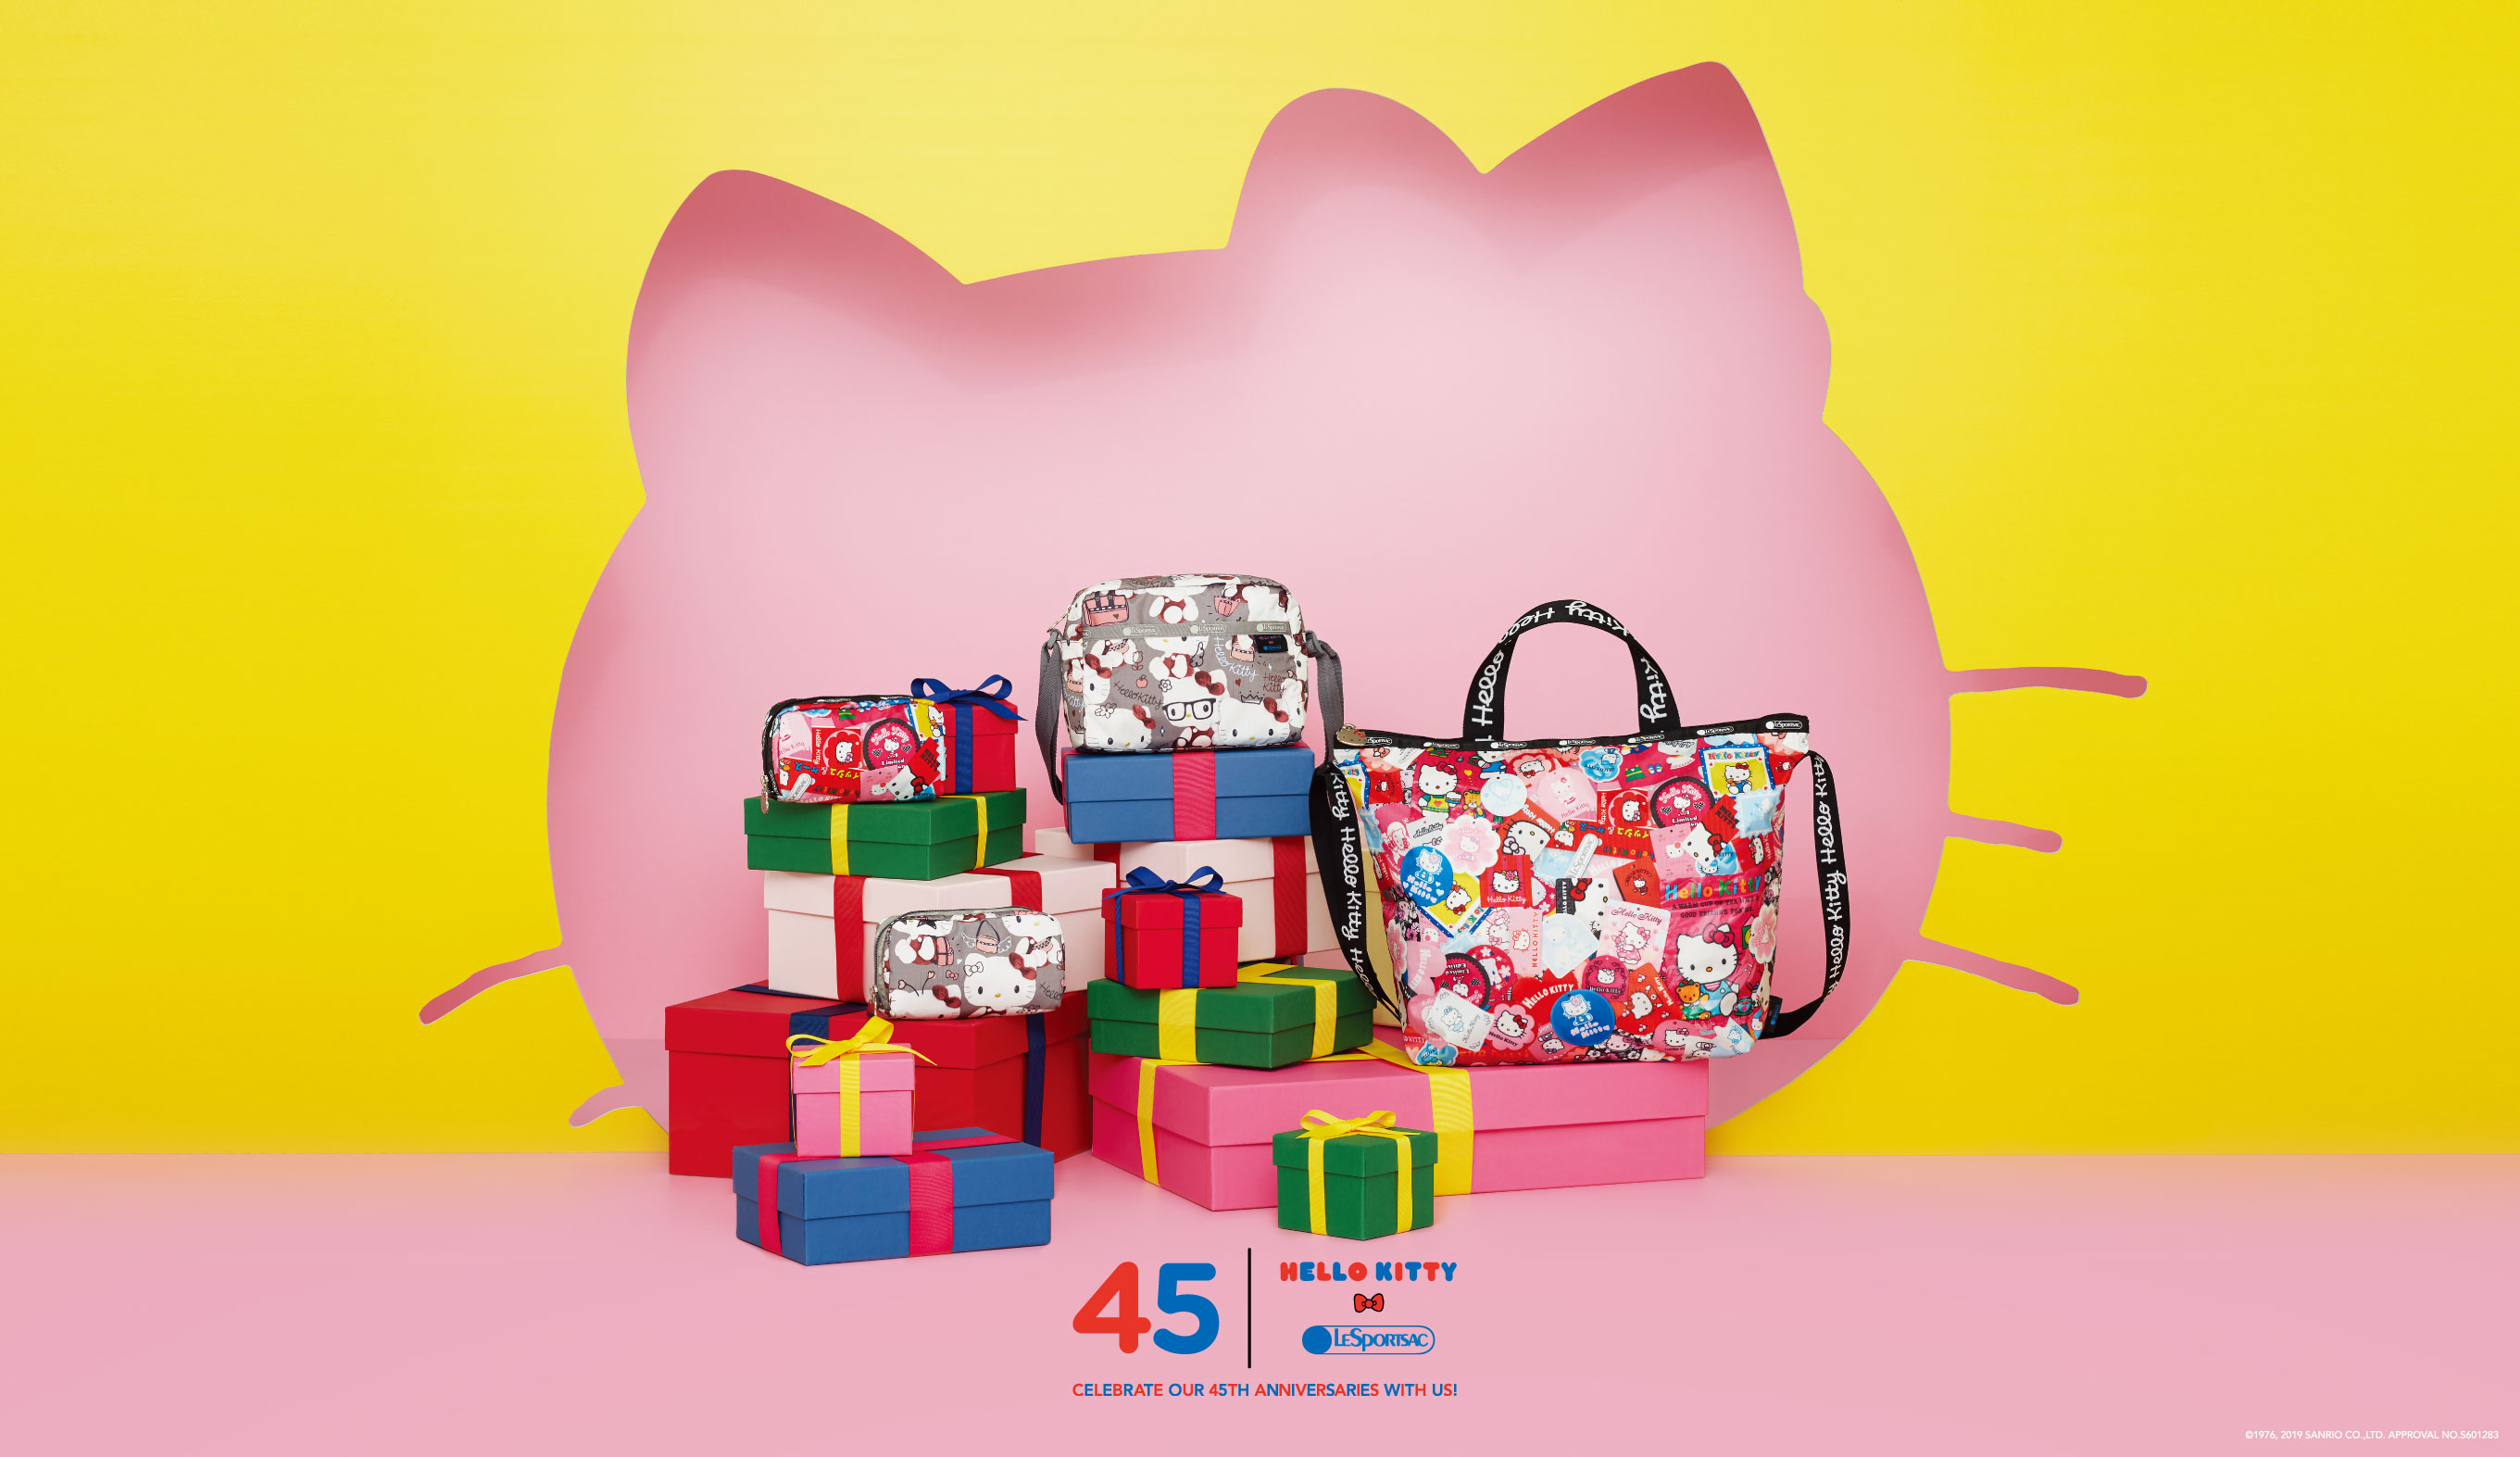 Untuk memperingati perayaan karakter Sanrio, Hello Kitty dan LeSportsac’s 45th year berkolaborasi dengan mengeluarkan koleksi HELLO KITTY x LeSportsac yang dijual di toko-toko Sanrio Jepang, Amerika dan negara-negara lainnya.
